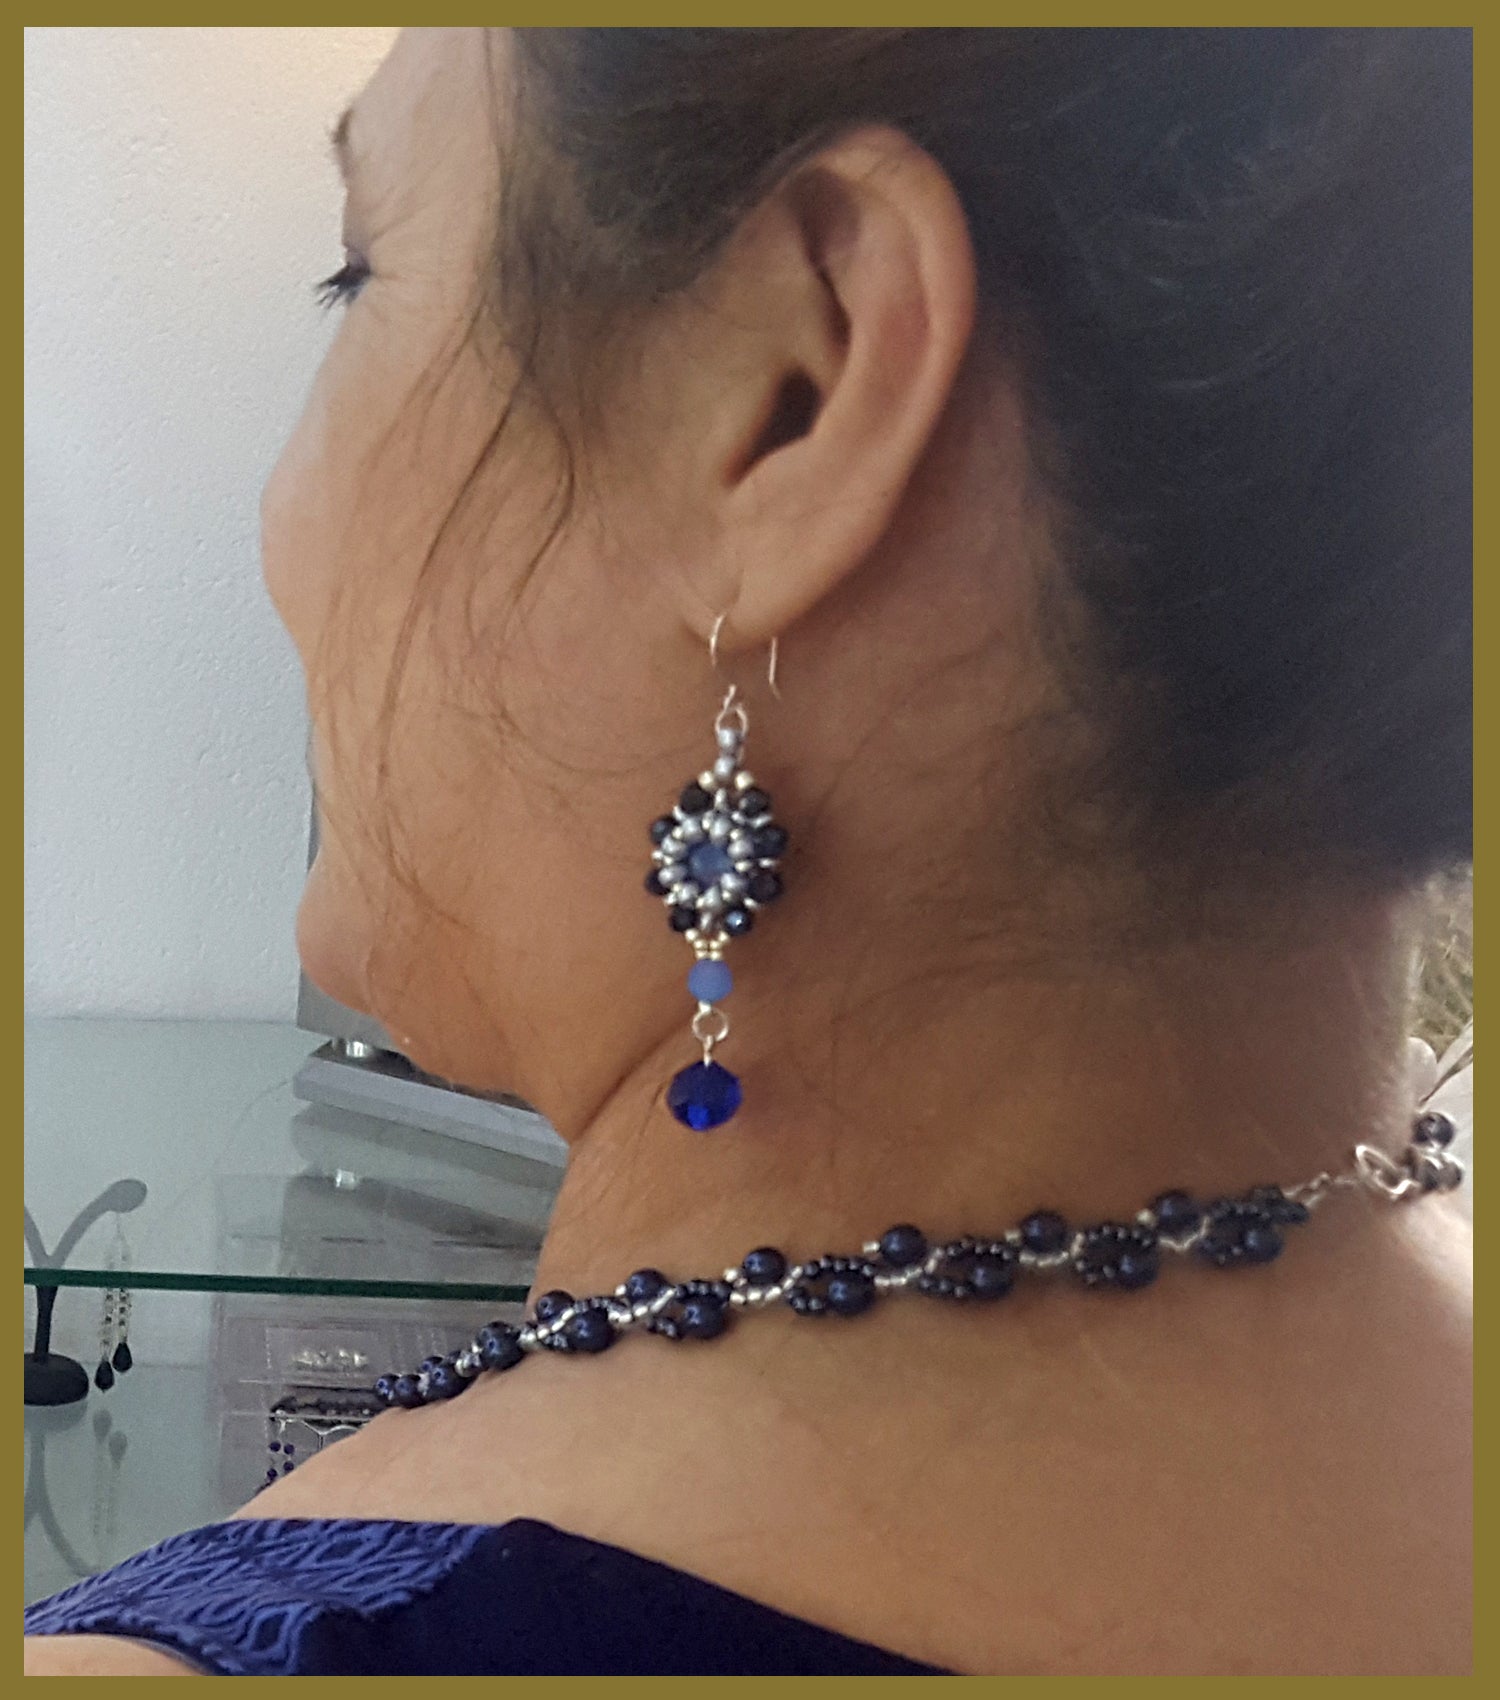 Dancing Clouds - Swarovski Dark Blue Pearl Beaded Necklace | (KJ-378N) Handmade Designer Necklace - Kalitheo Jewellery